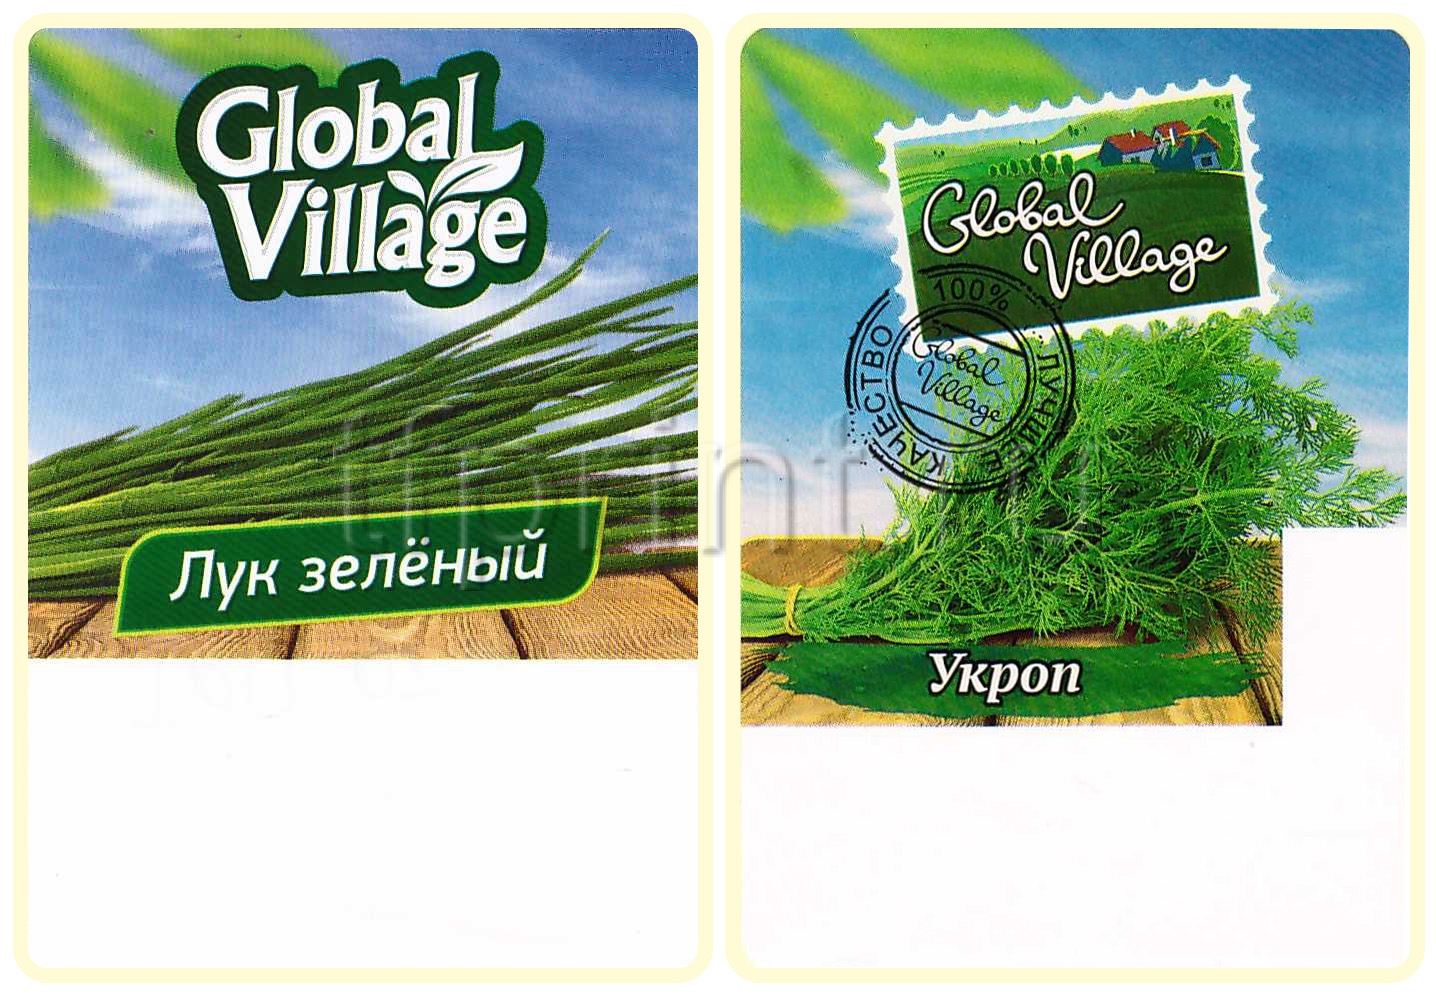 Global village производитель. Глобал Виладж зелень. Глобал Вилладж этикетка. Этикетка зелень. Глобал Вилладж продукты.